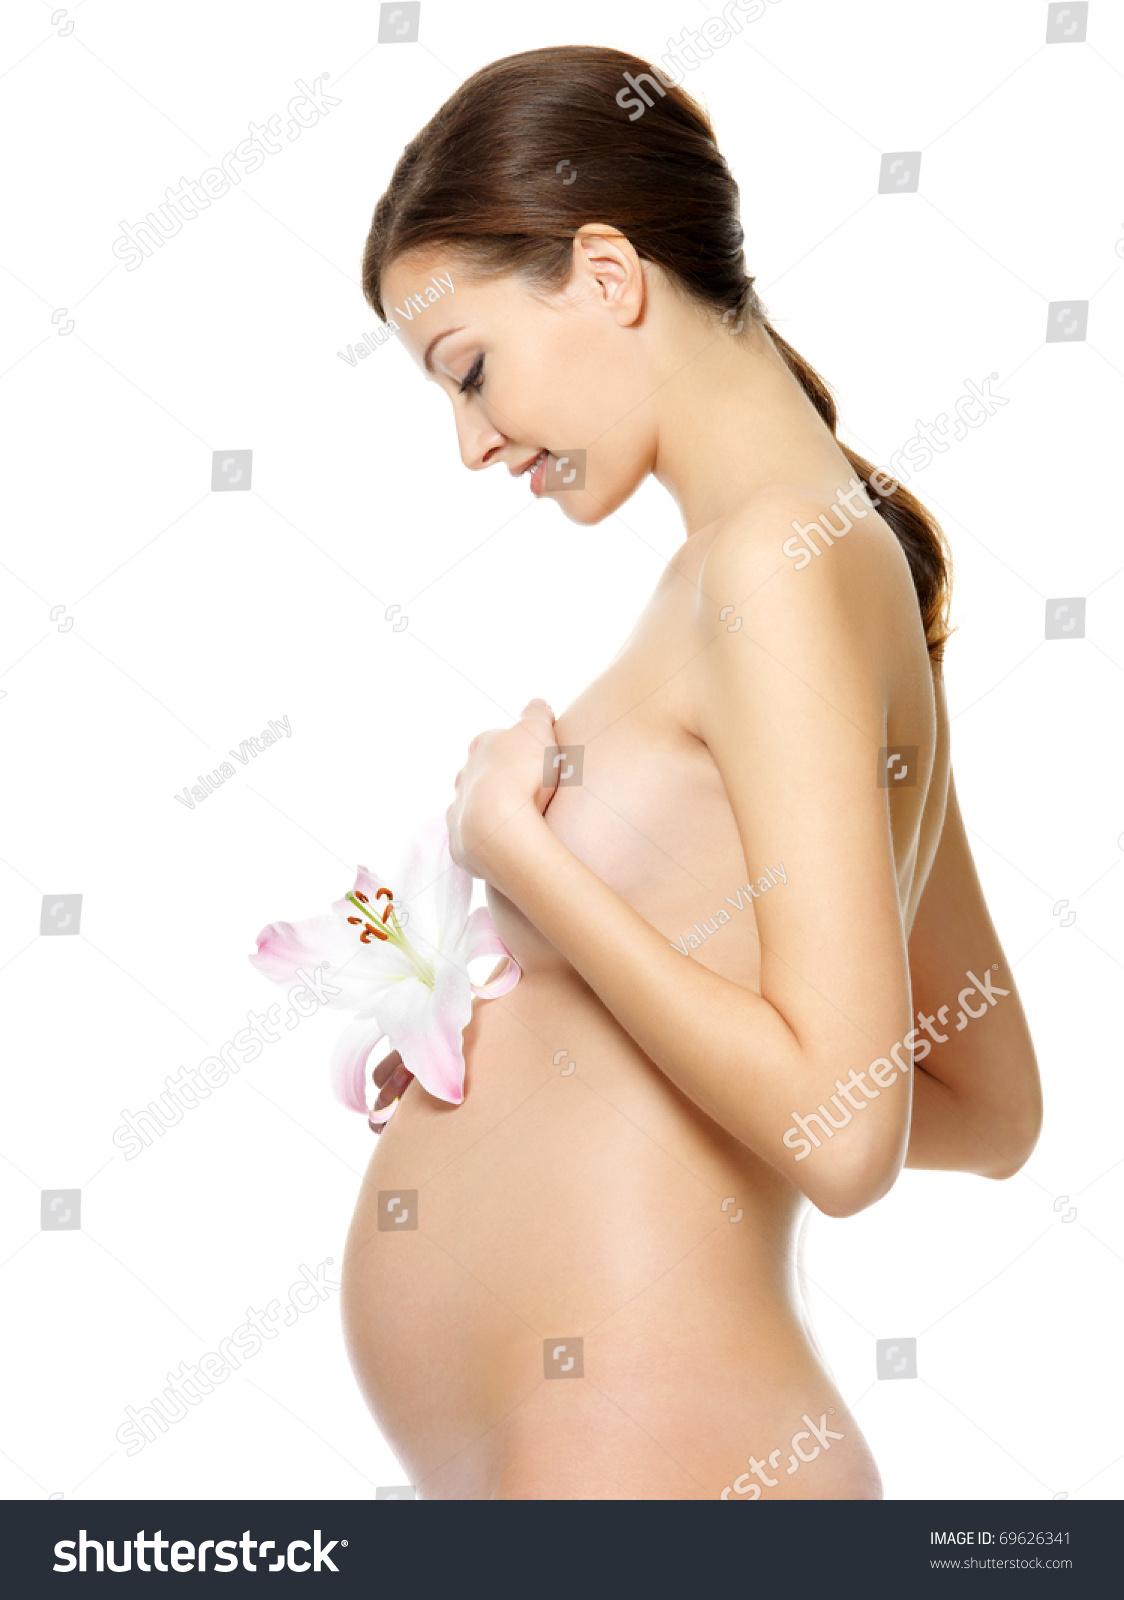 Pregnant Bodies 92